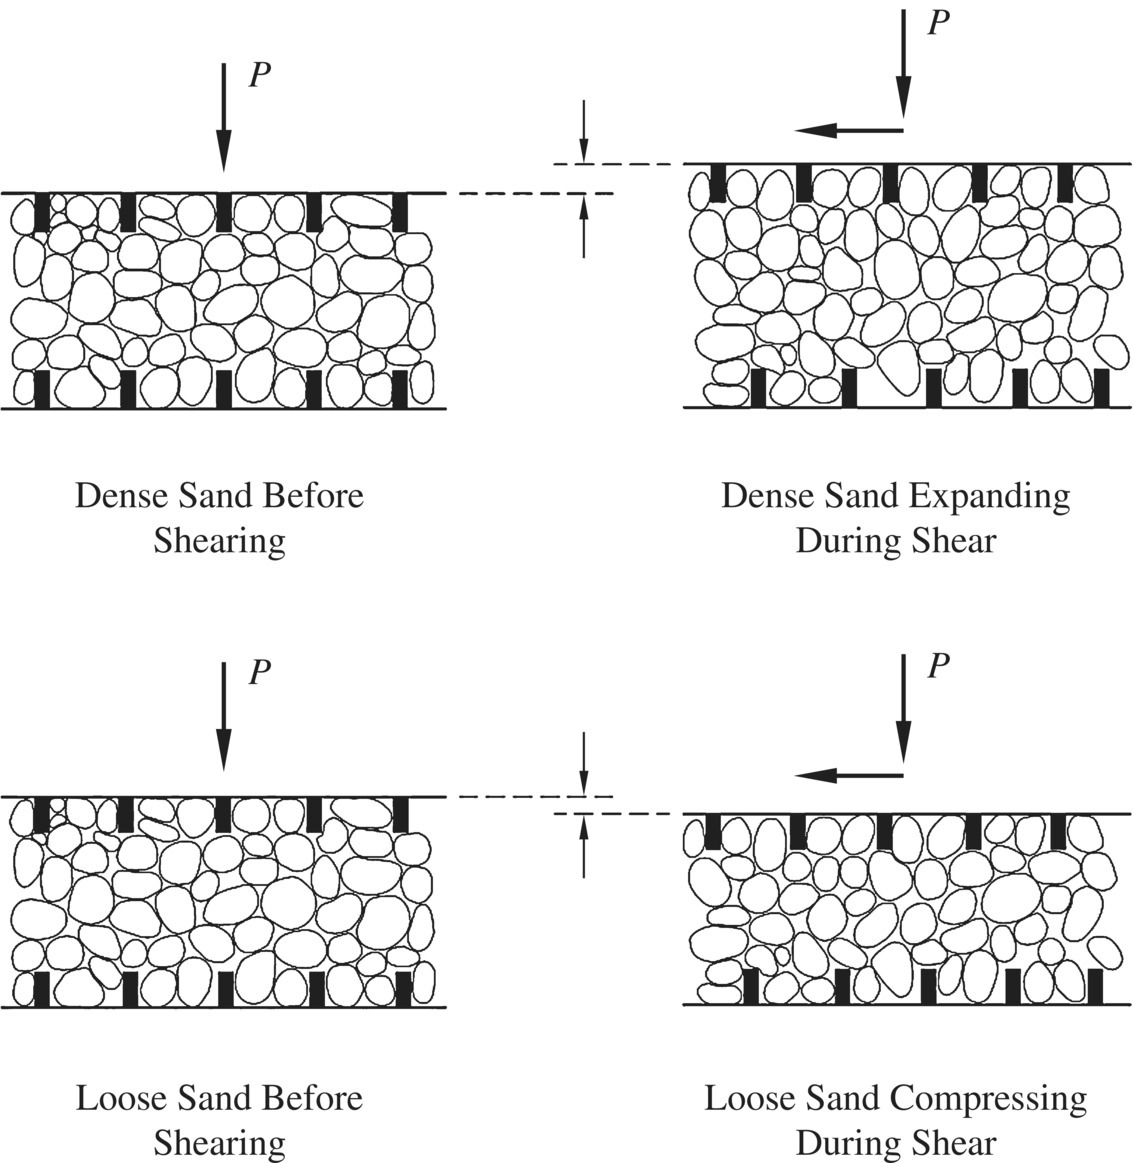 4 Schematics illustrating dense sand before shearing (top-left), dense sand expanding during shear (top-right), loose sand before shearing (bottom-left), and loose sand compressing during shear (bottom-right).